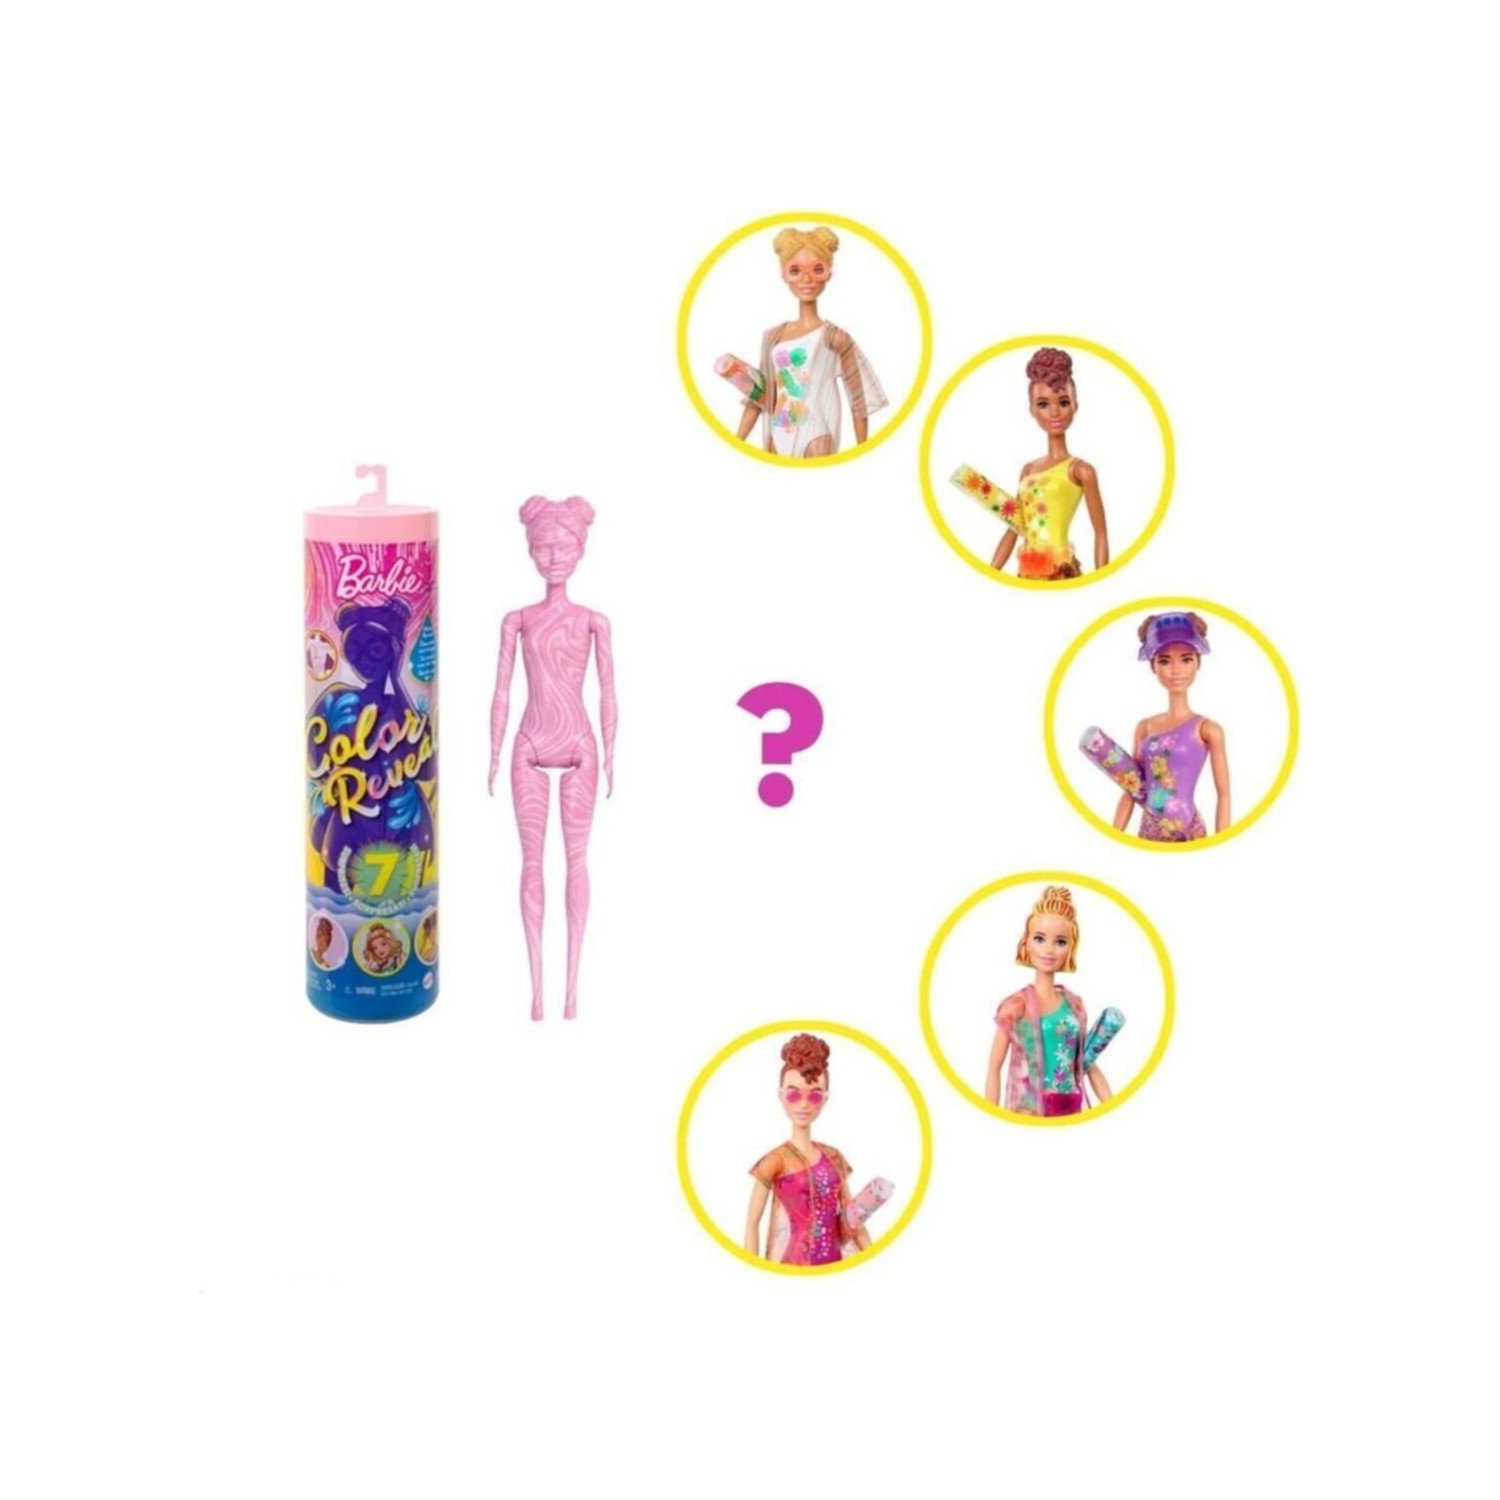 Кукла Barbie Color Change Sand and Sun Series Series GWC57 кукла сюрприз barbie color reveal totally denim series hjx55 разноцветный